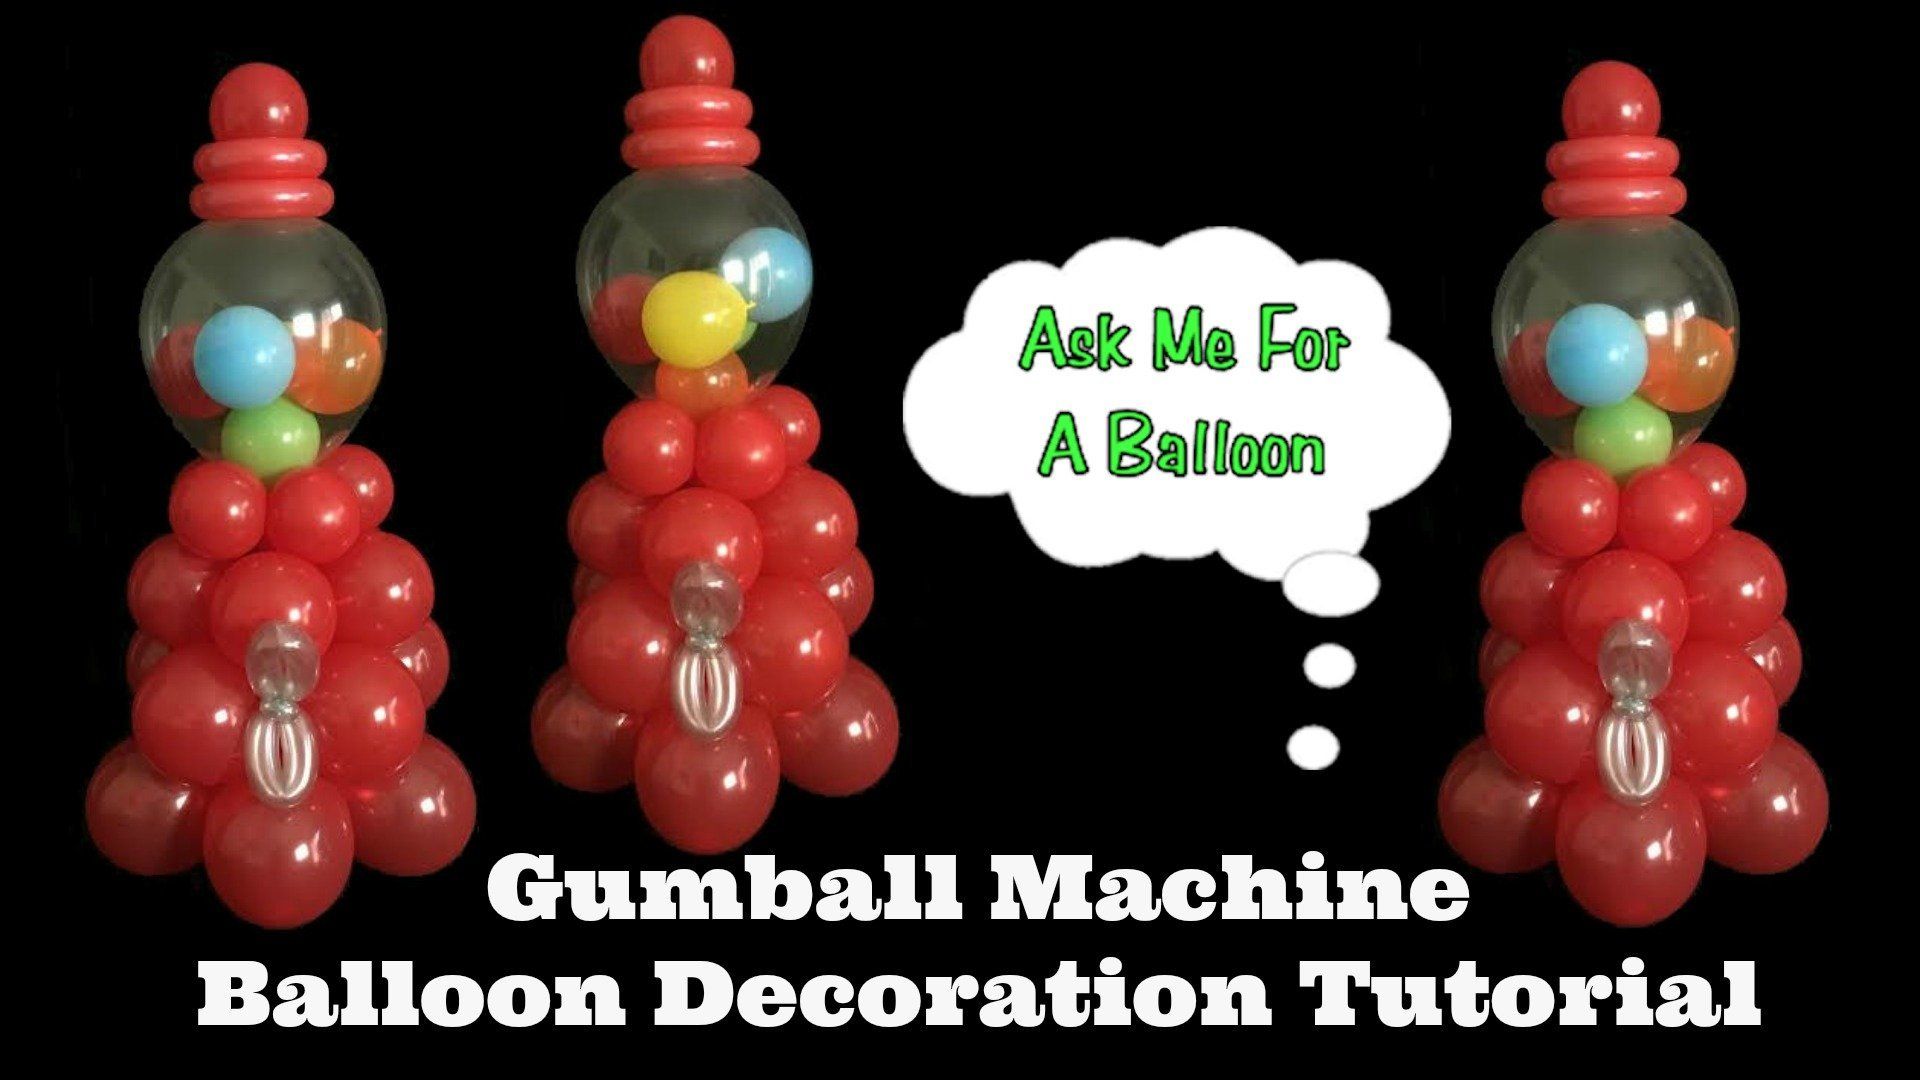 Gumball machine balloon centerpiece.